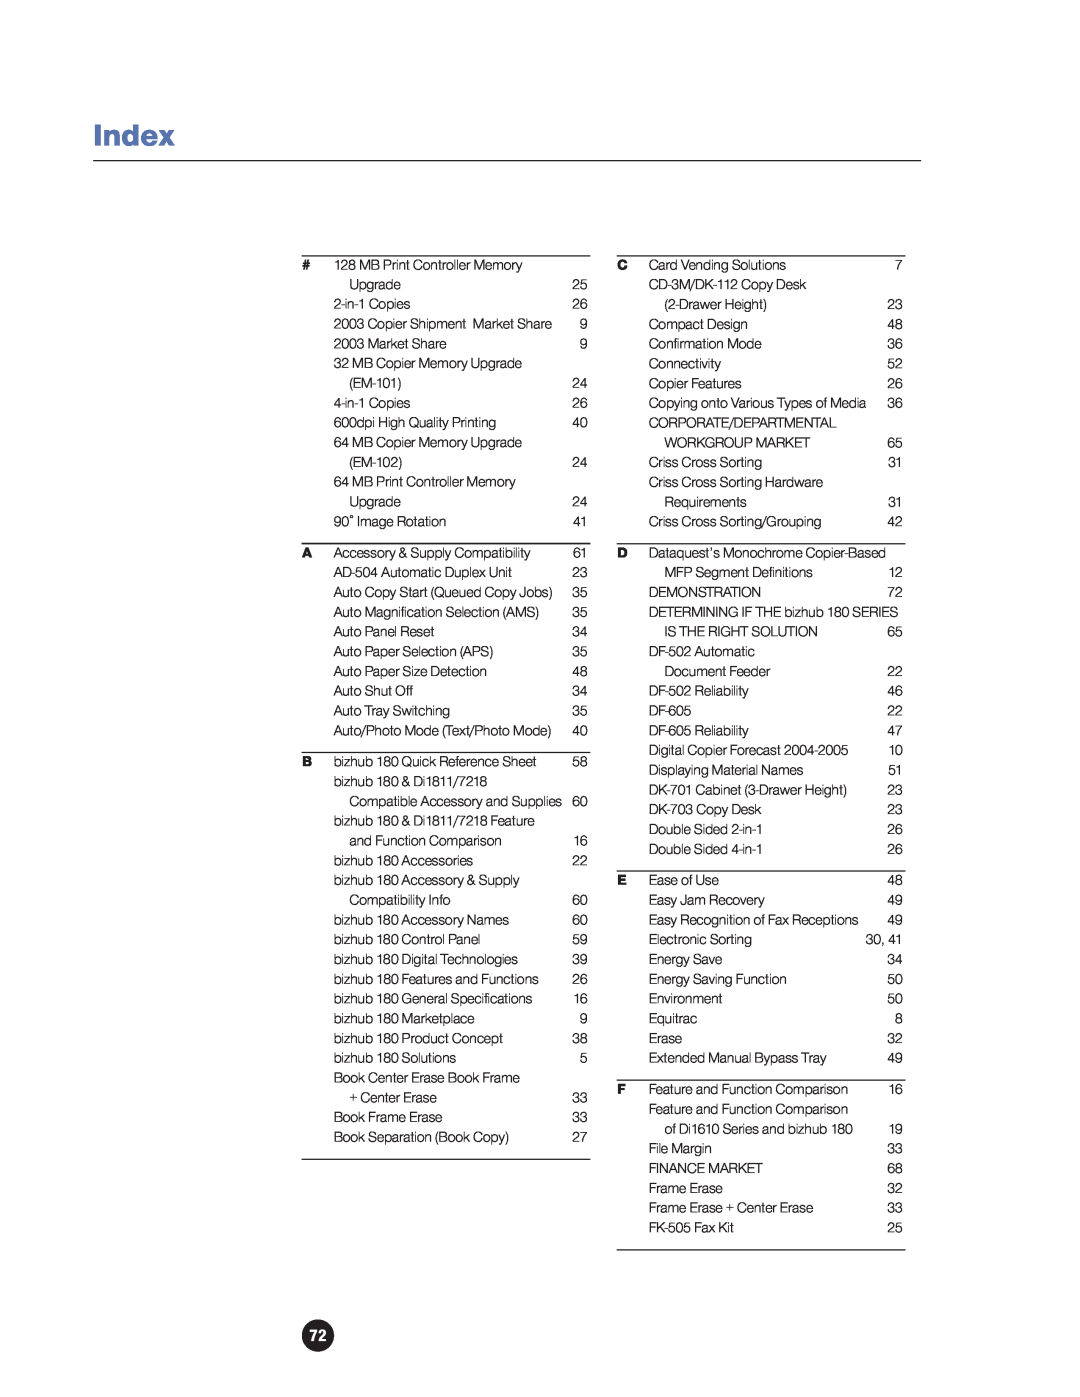 Konica Minolta 180 manual Index, Dataquest’s Monochrome Copier-Based, Compatible Accessory and Supplies 